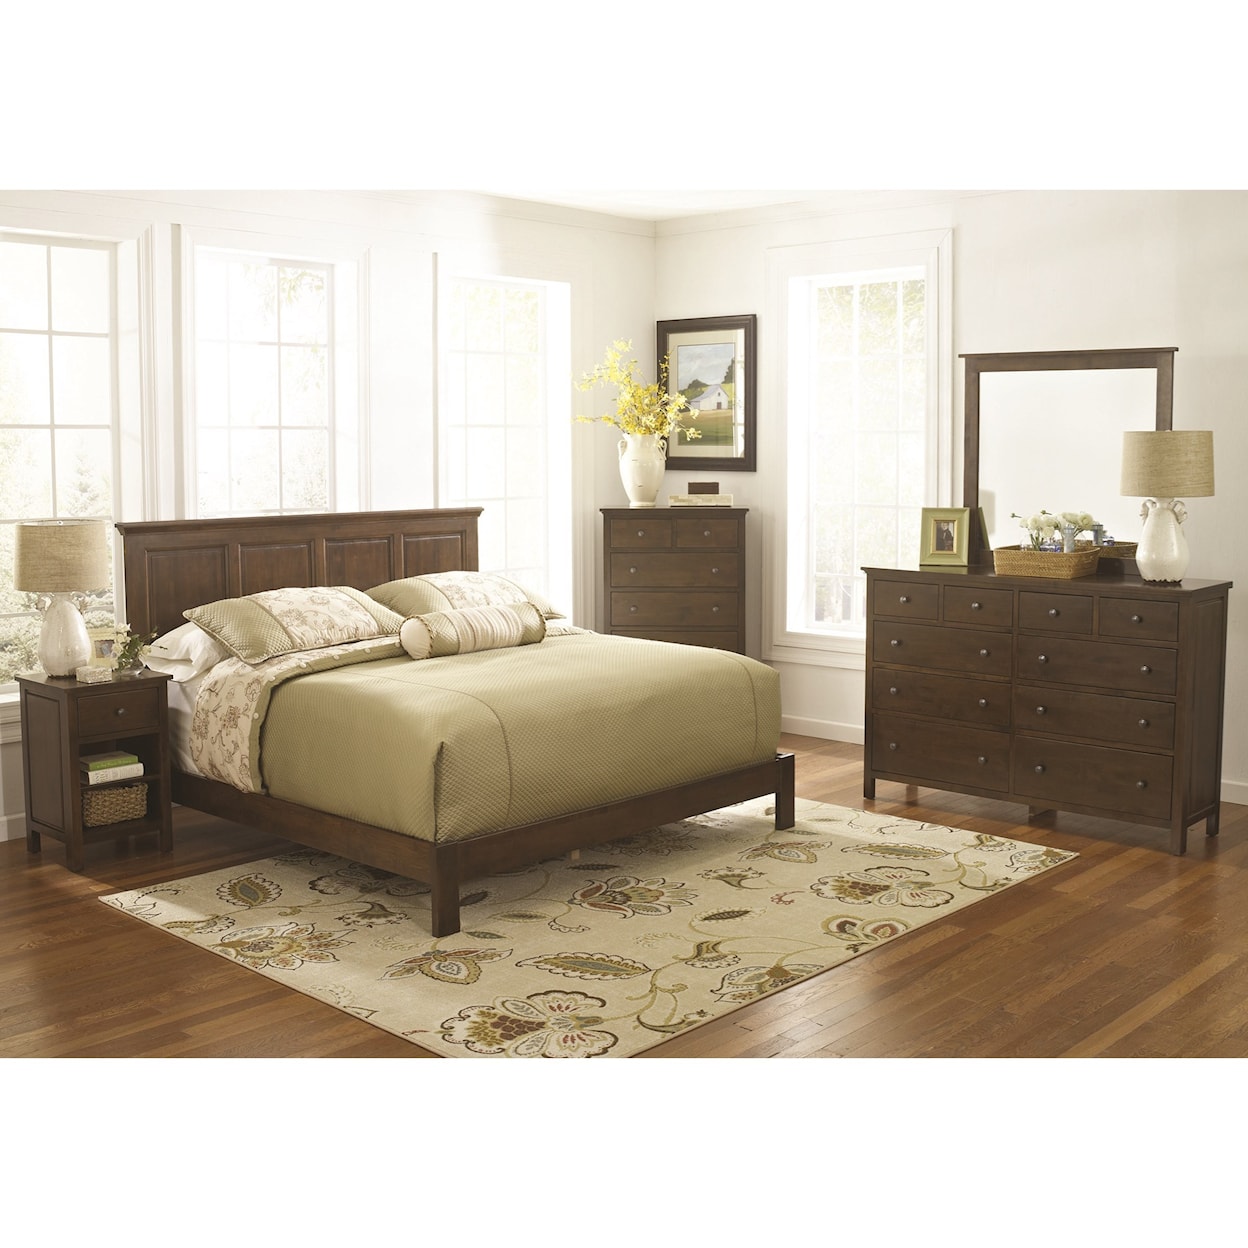 Archbold Furniture Heritage Raised Panel Bed Bedroom Group